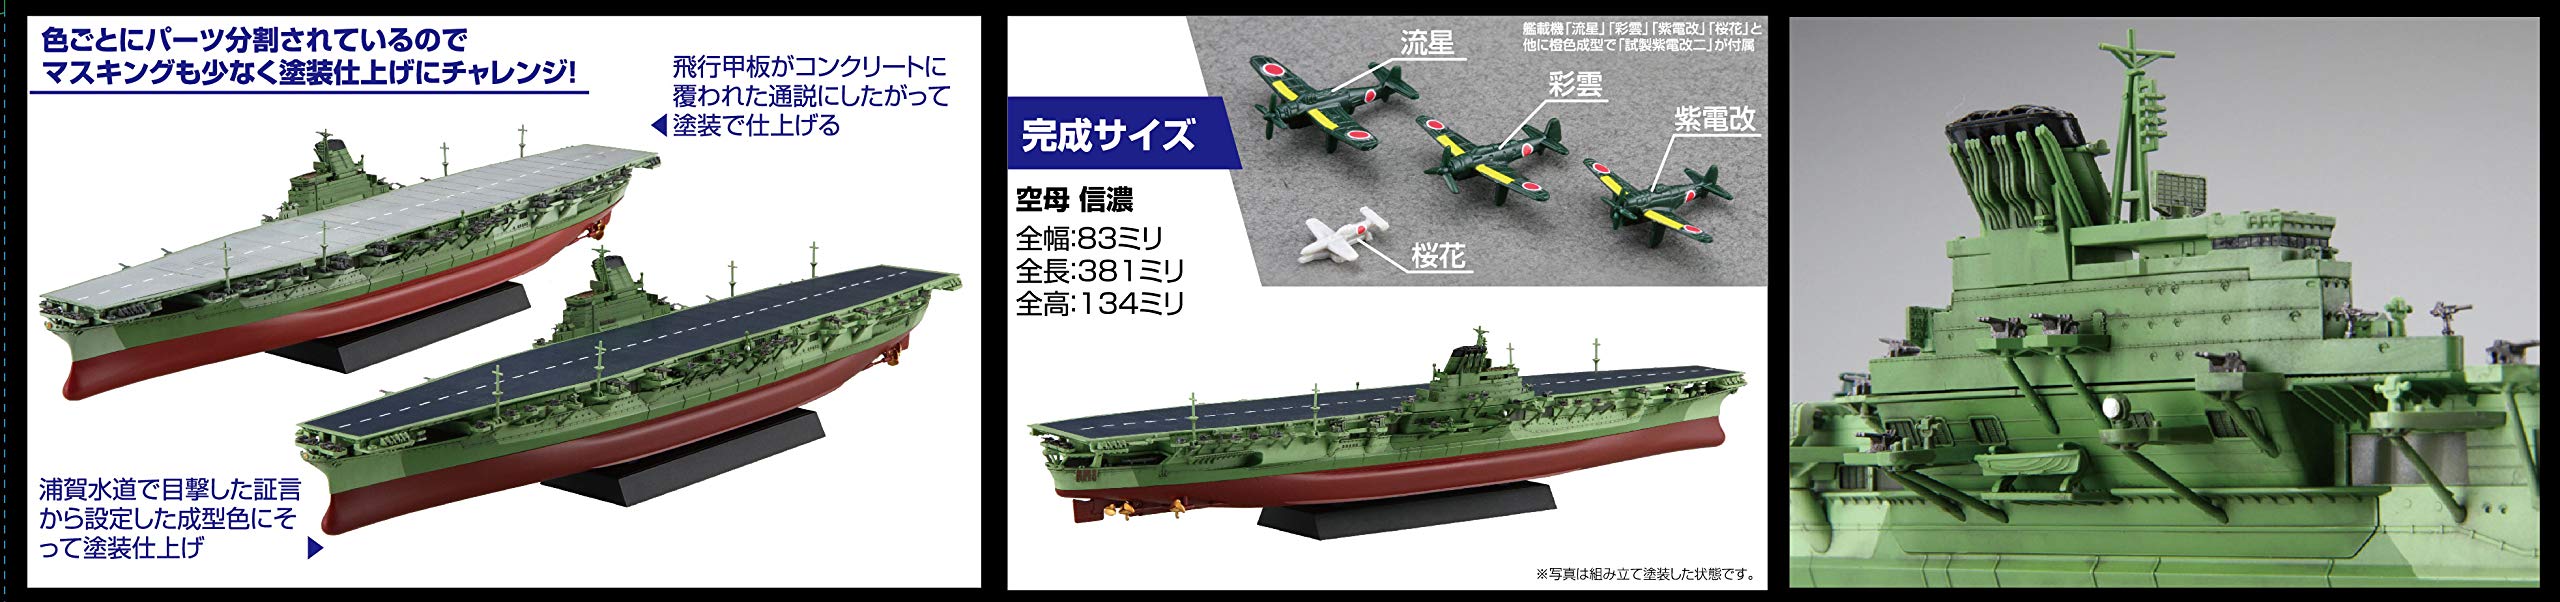 Fujimi Model 1/700 Ship Next Series No.8 Ex-2 Japanese Navy Aircraft Carrier Shinano (Concrete Deck) Ship Nx-8 Ex-2